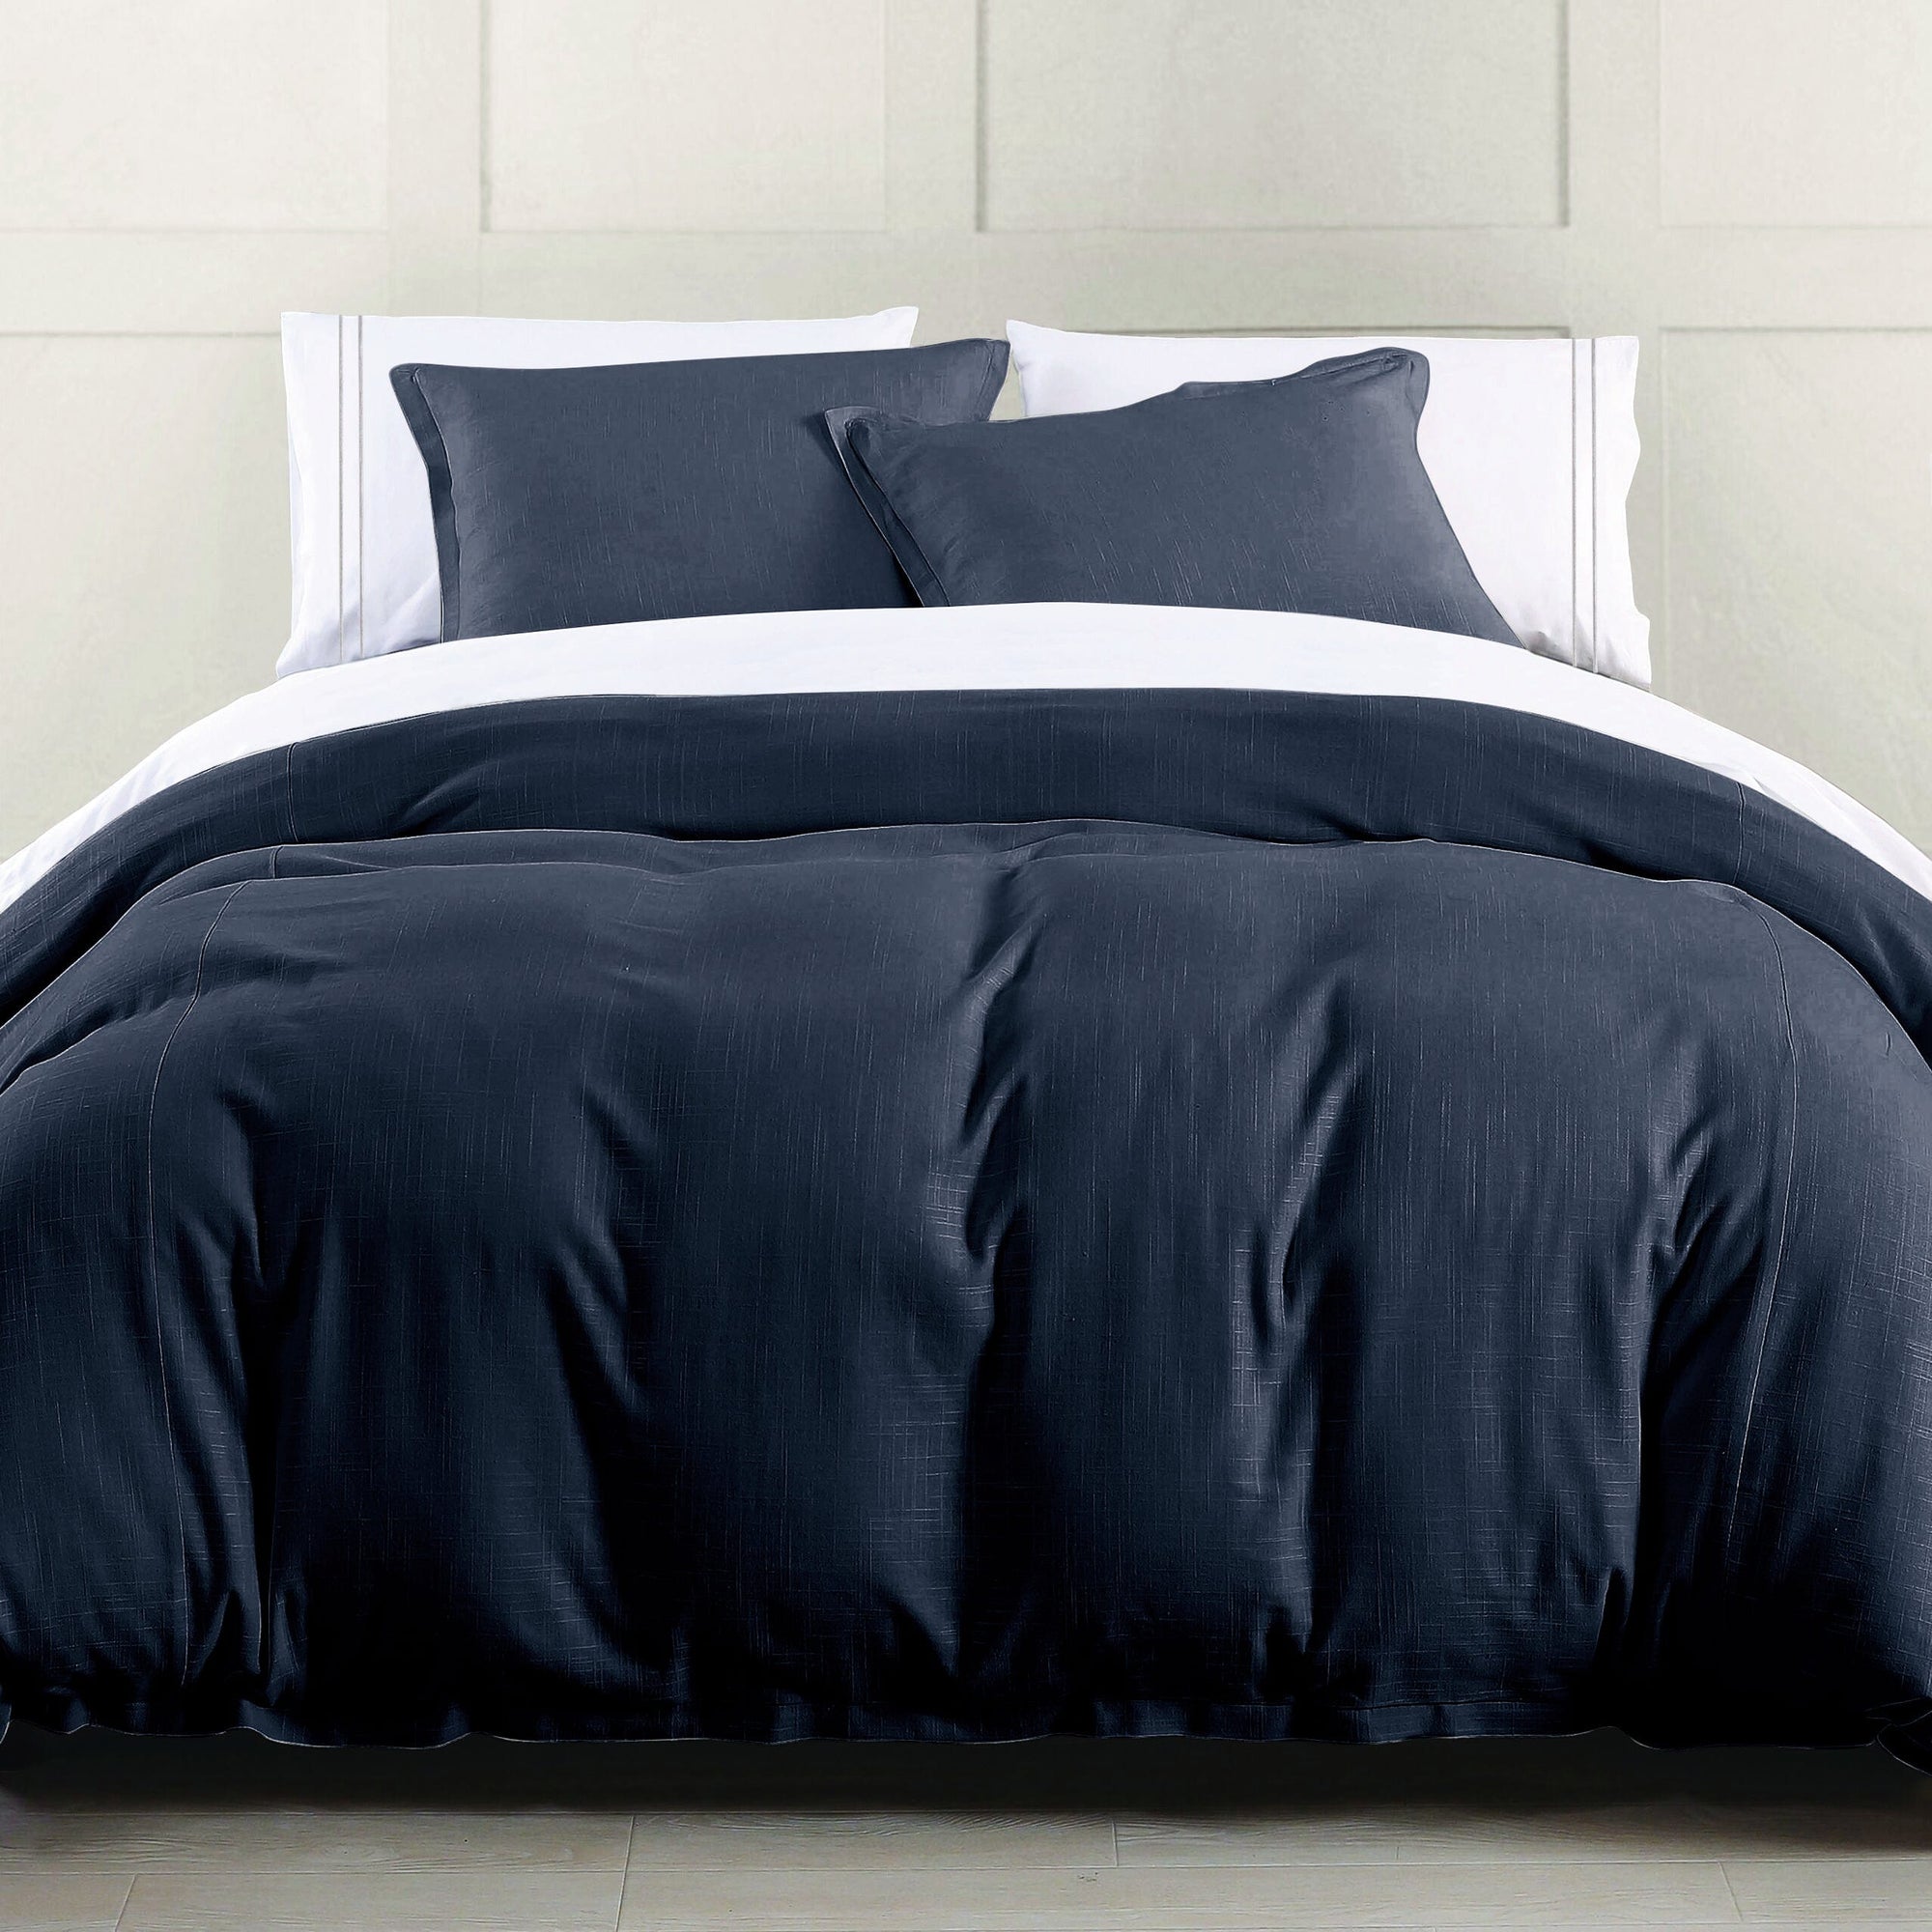 Hera Washed Linen Flange Bedding Set Comforter Set / Super Queen / Navy Comforter / Duvet Cover